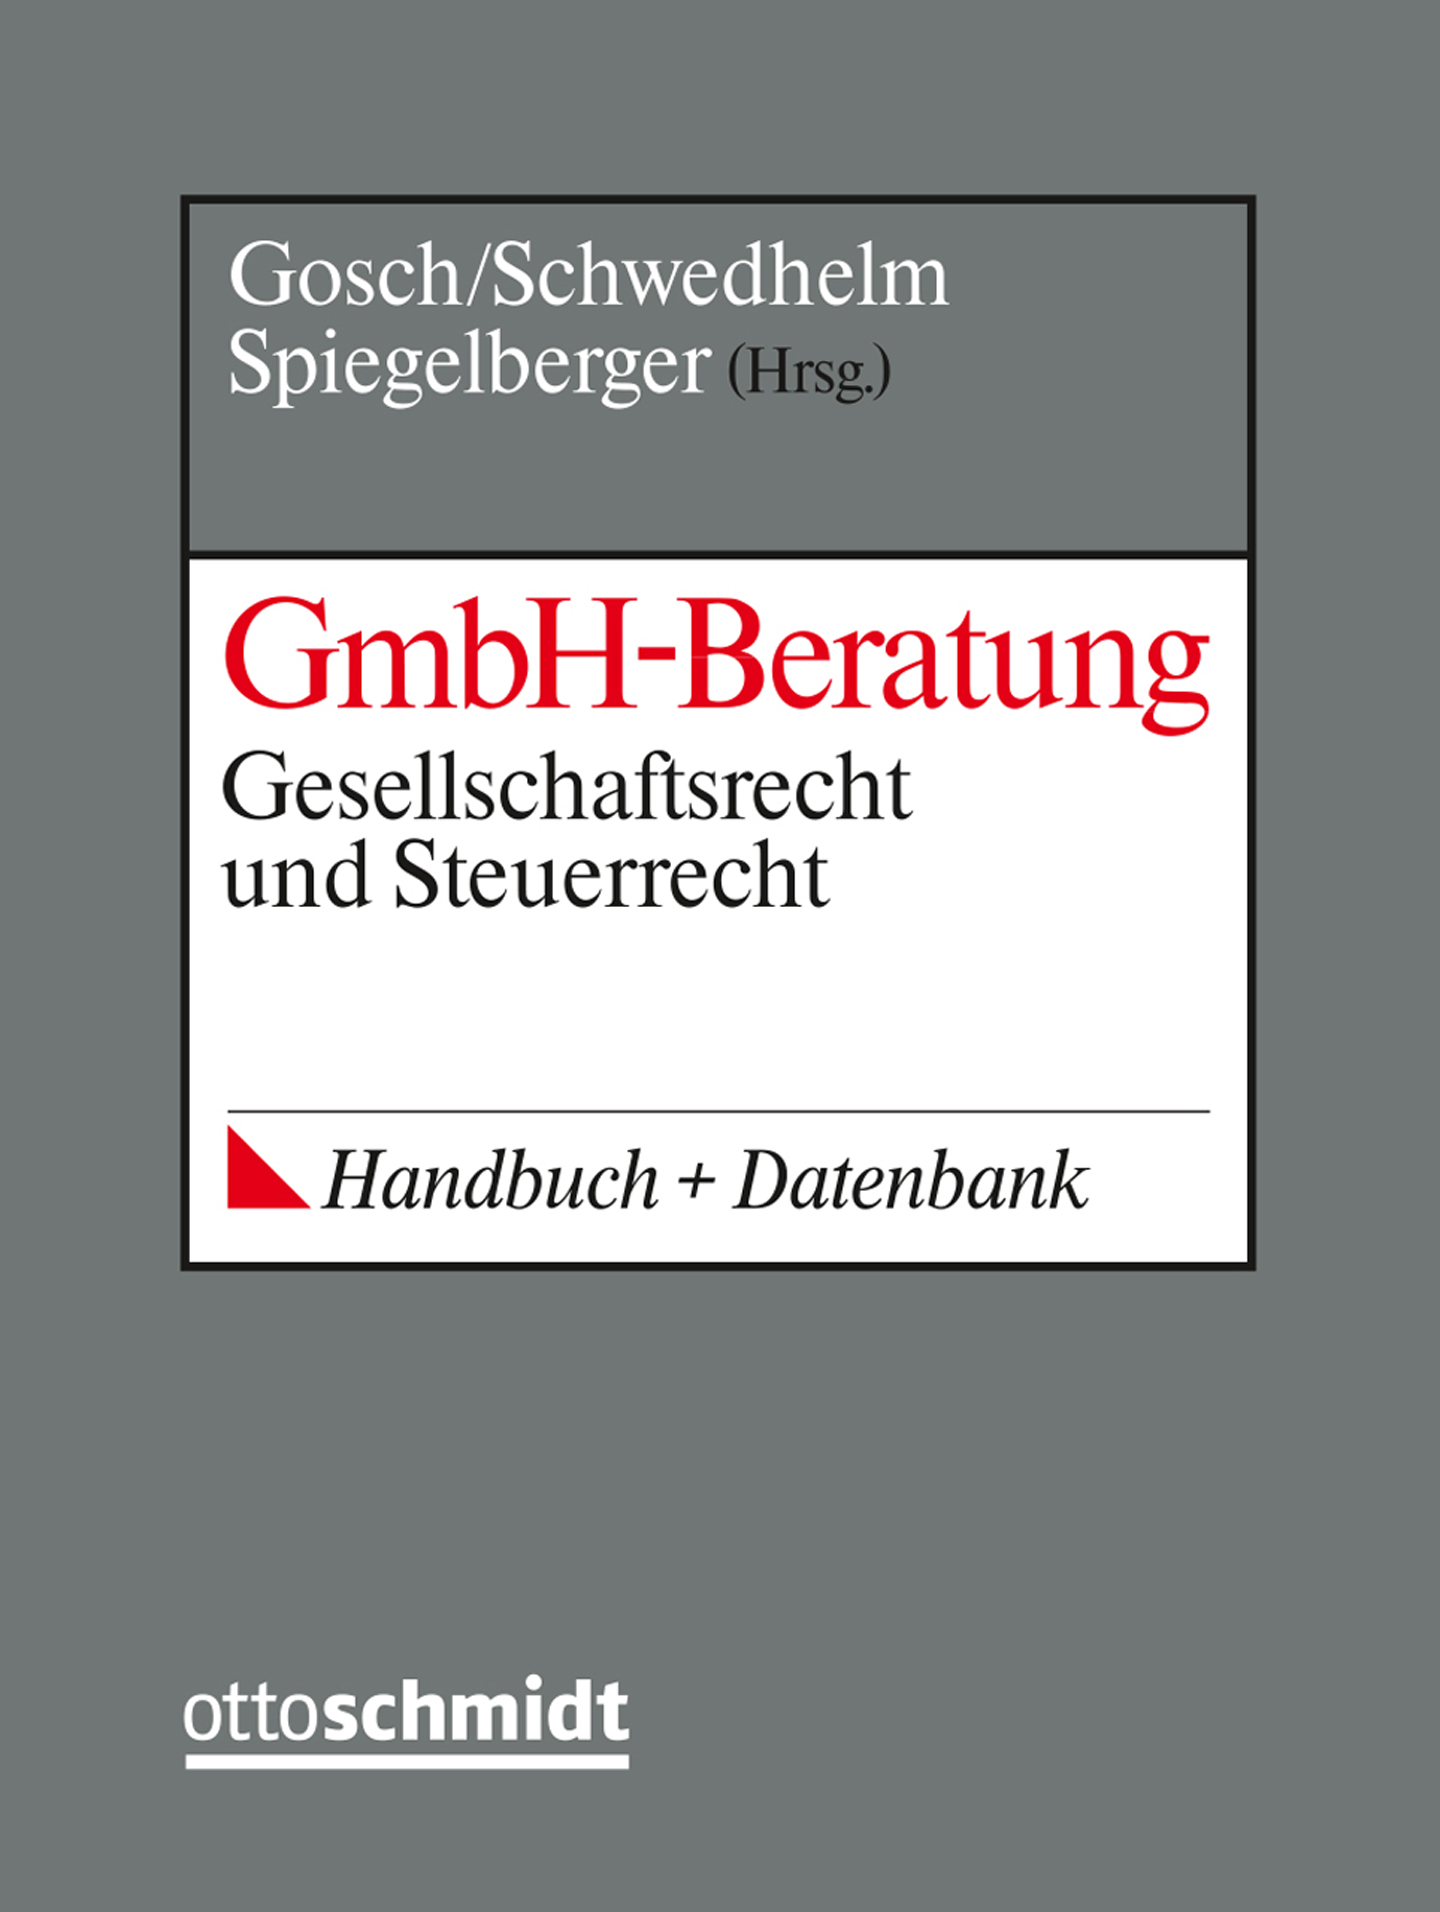 Abbildung: GmbH-Beratung